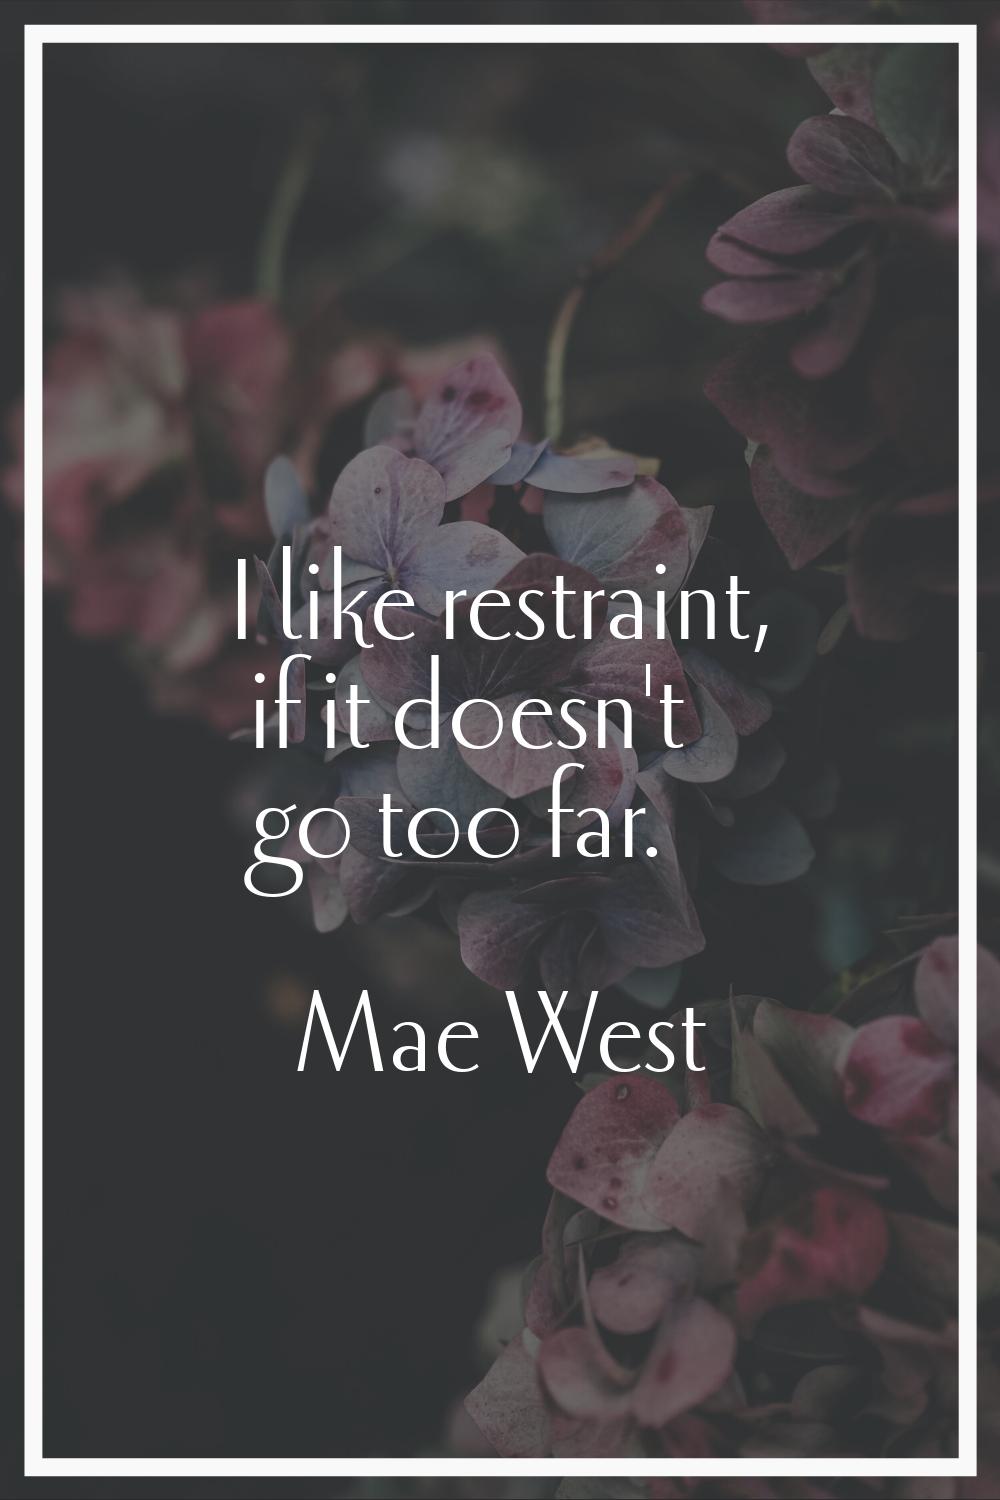 I like restraint, if it doesn't go too far.